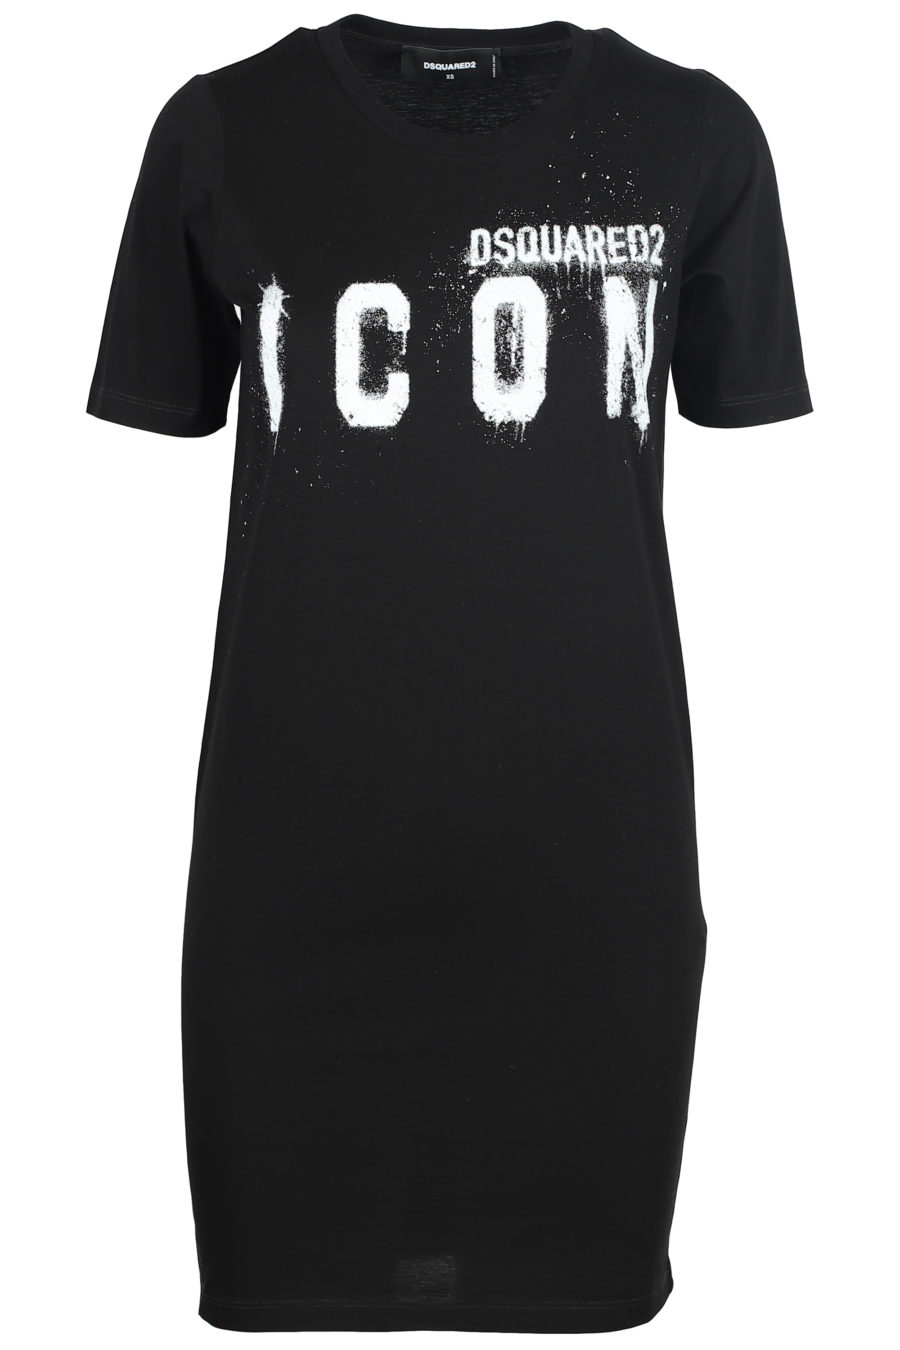 Vestido camiseta negro con logo "Icon" spray - IMG 5505